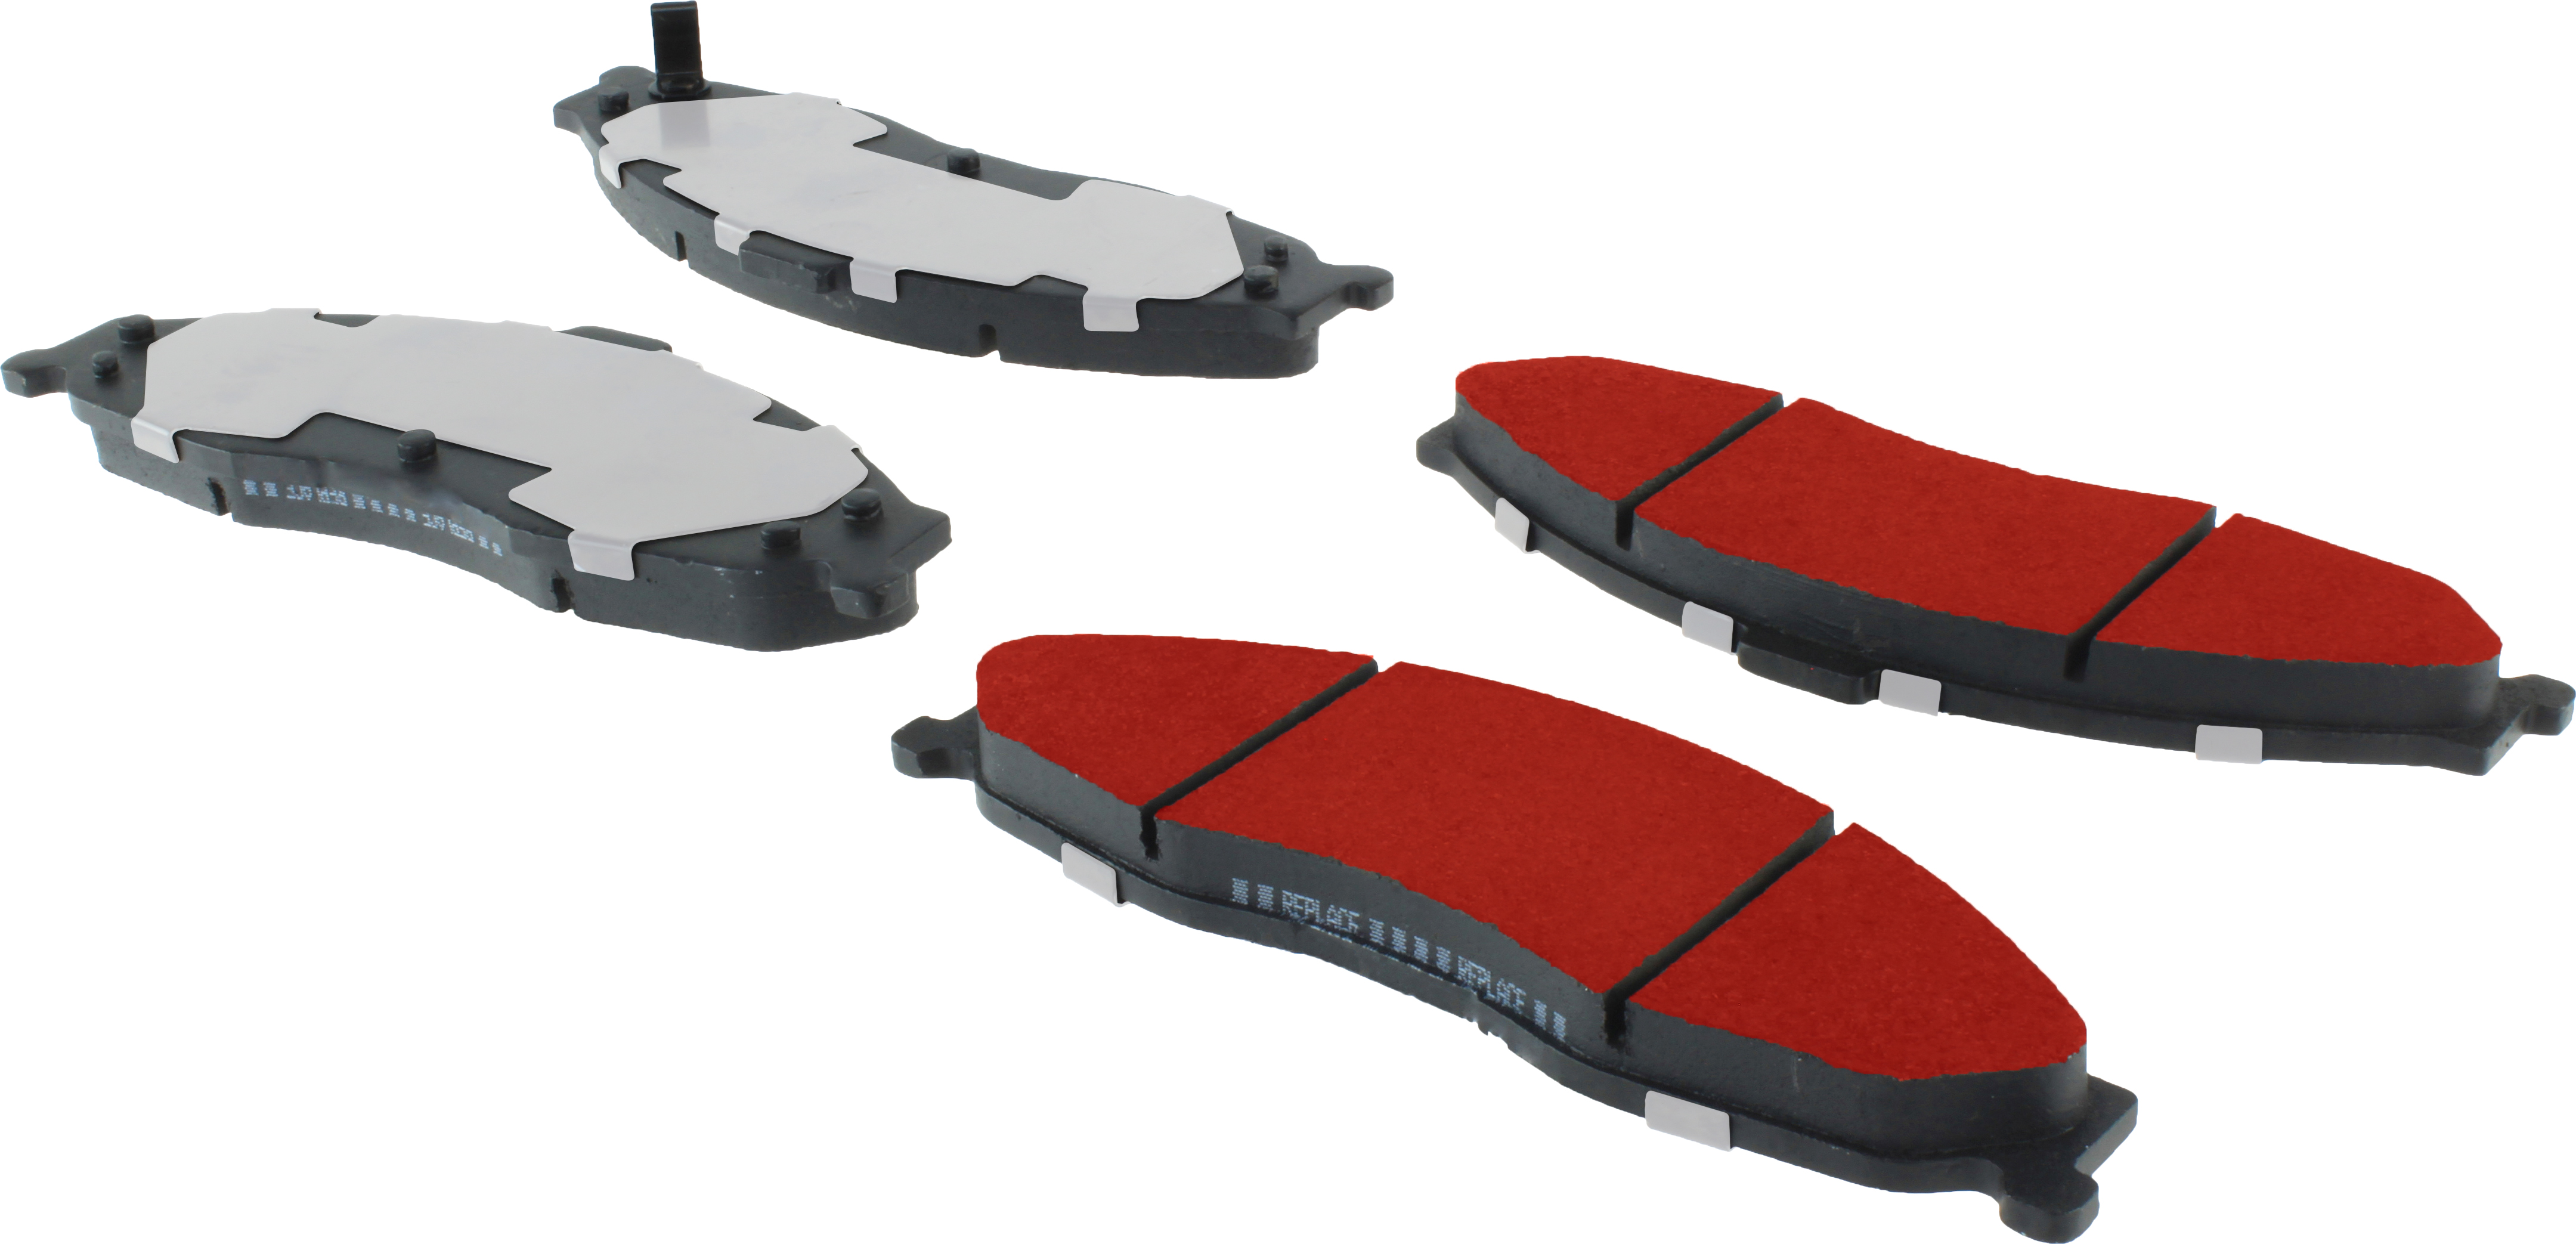 Disc Brake Pad Set-PQ PRO Brake Pads with Shims and Hardware Rear Centric